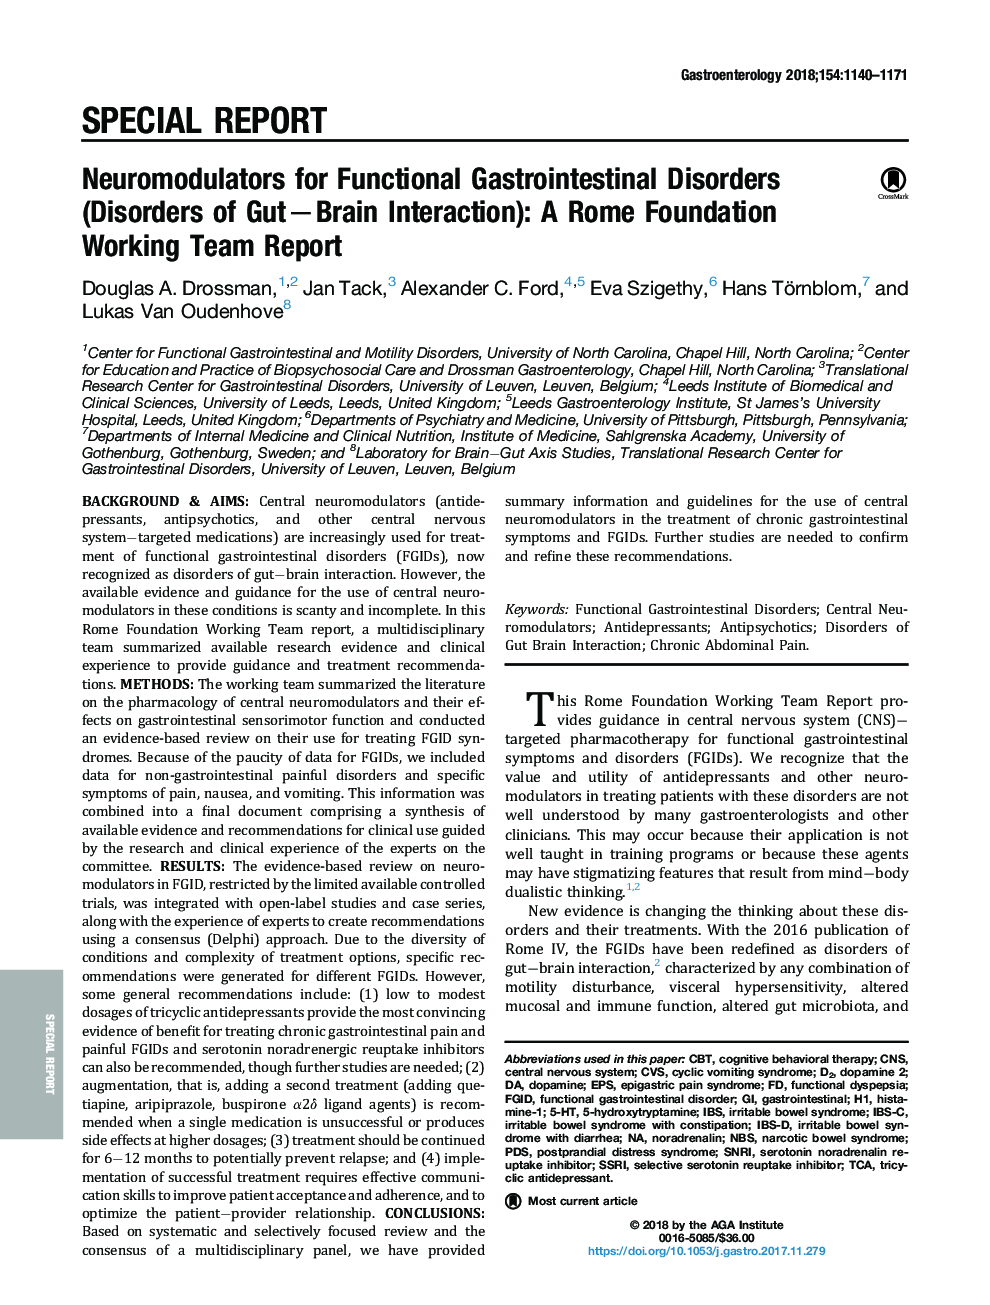 Neuromodulators for Functional Gastrointestinal Disorders (Disorders of GutâBrain Interaction): A Rome Foundation Working Team Report